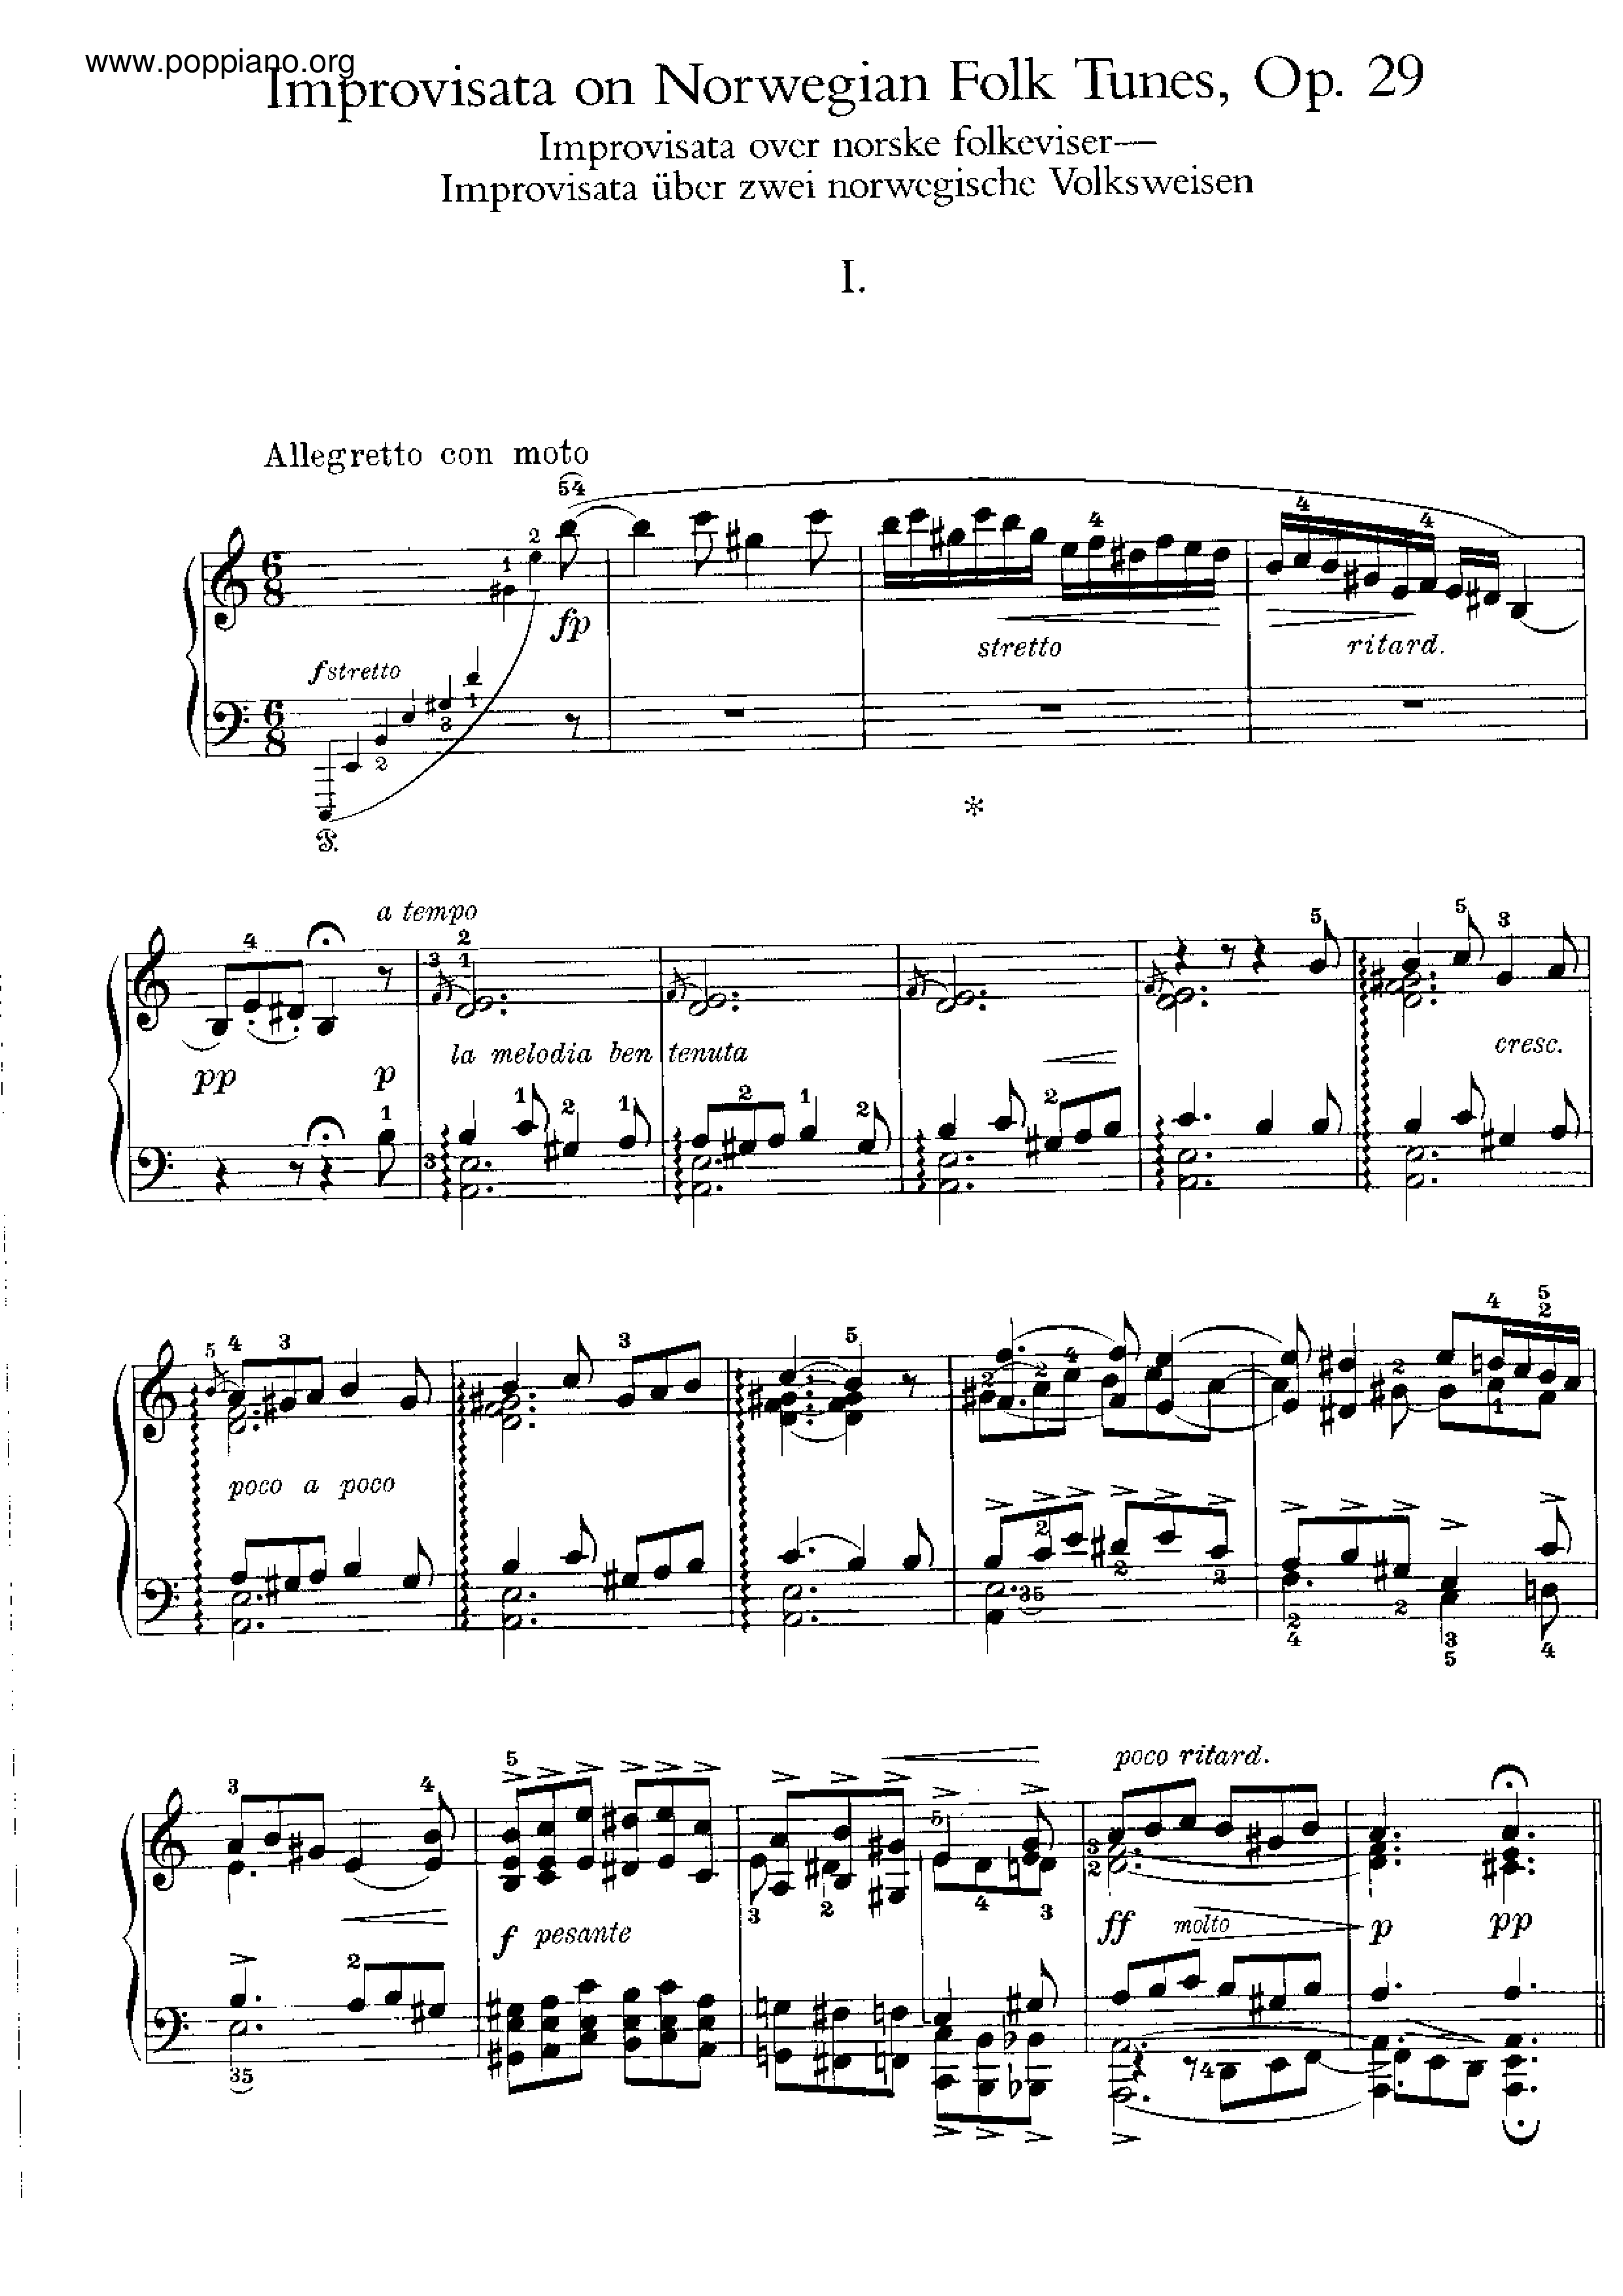 Improvisations on 2 Norwegian Folk Song,s, Op.29 Score